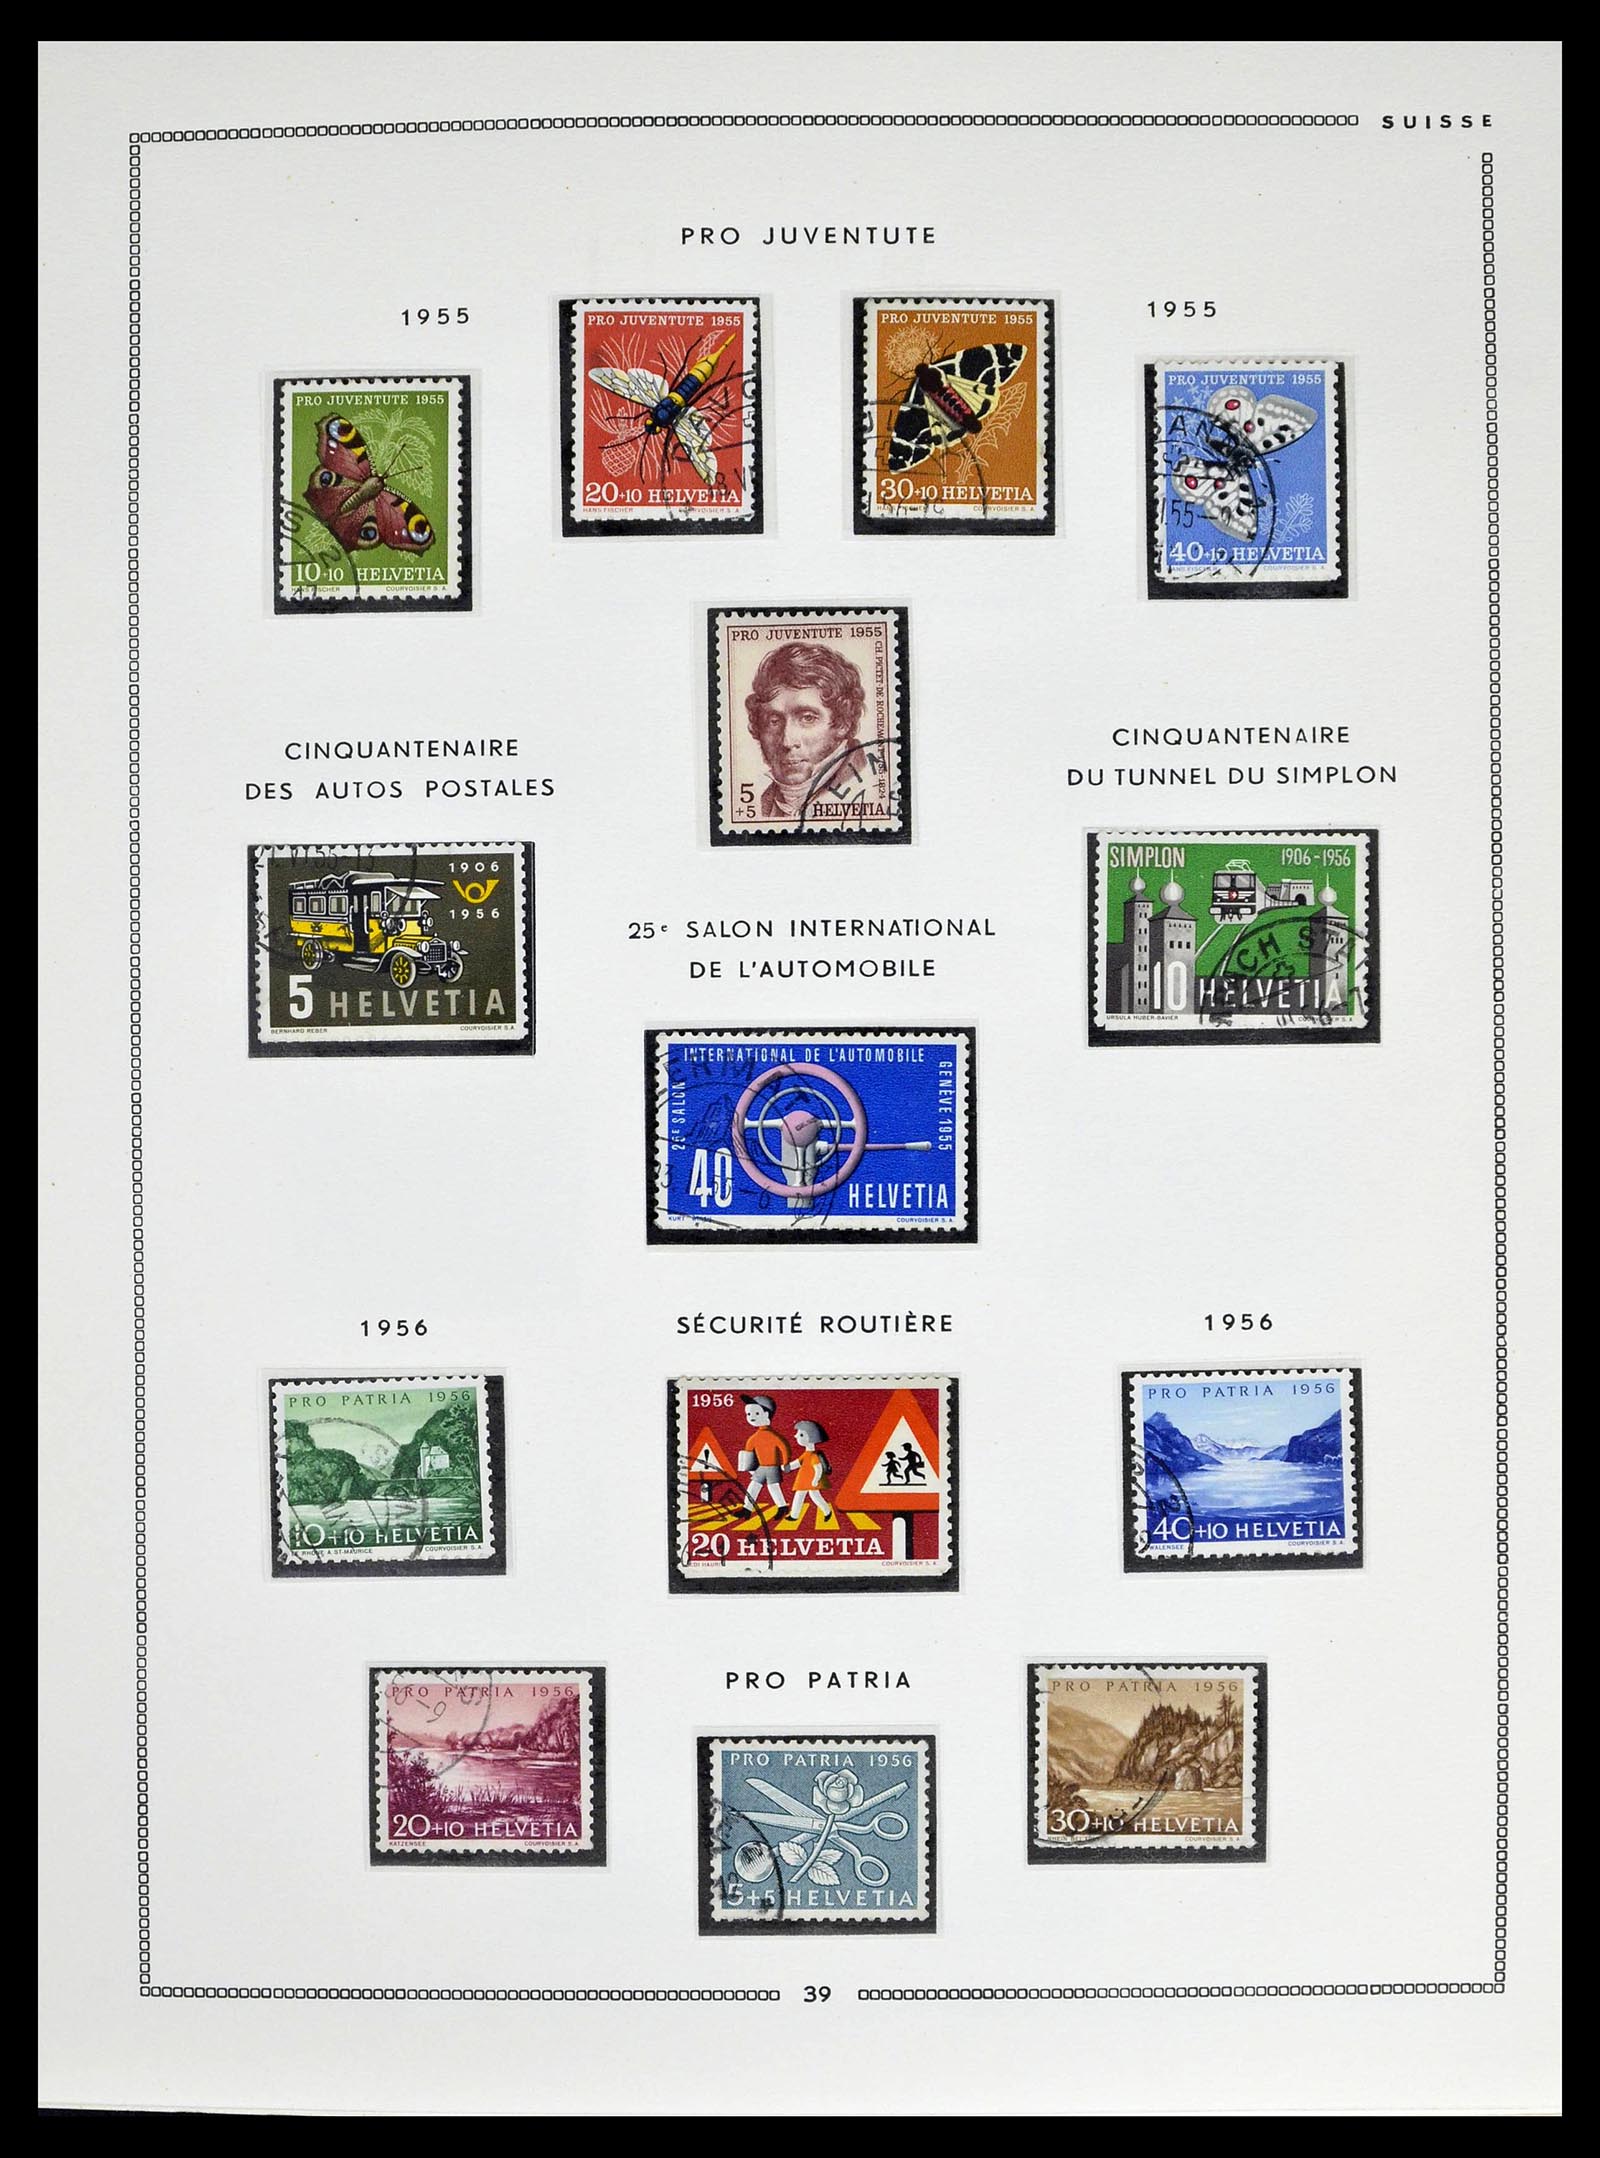 39094 0037 - Stamp collection 39094 Switzerland 1850-2005.